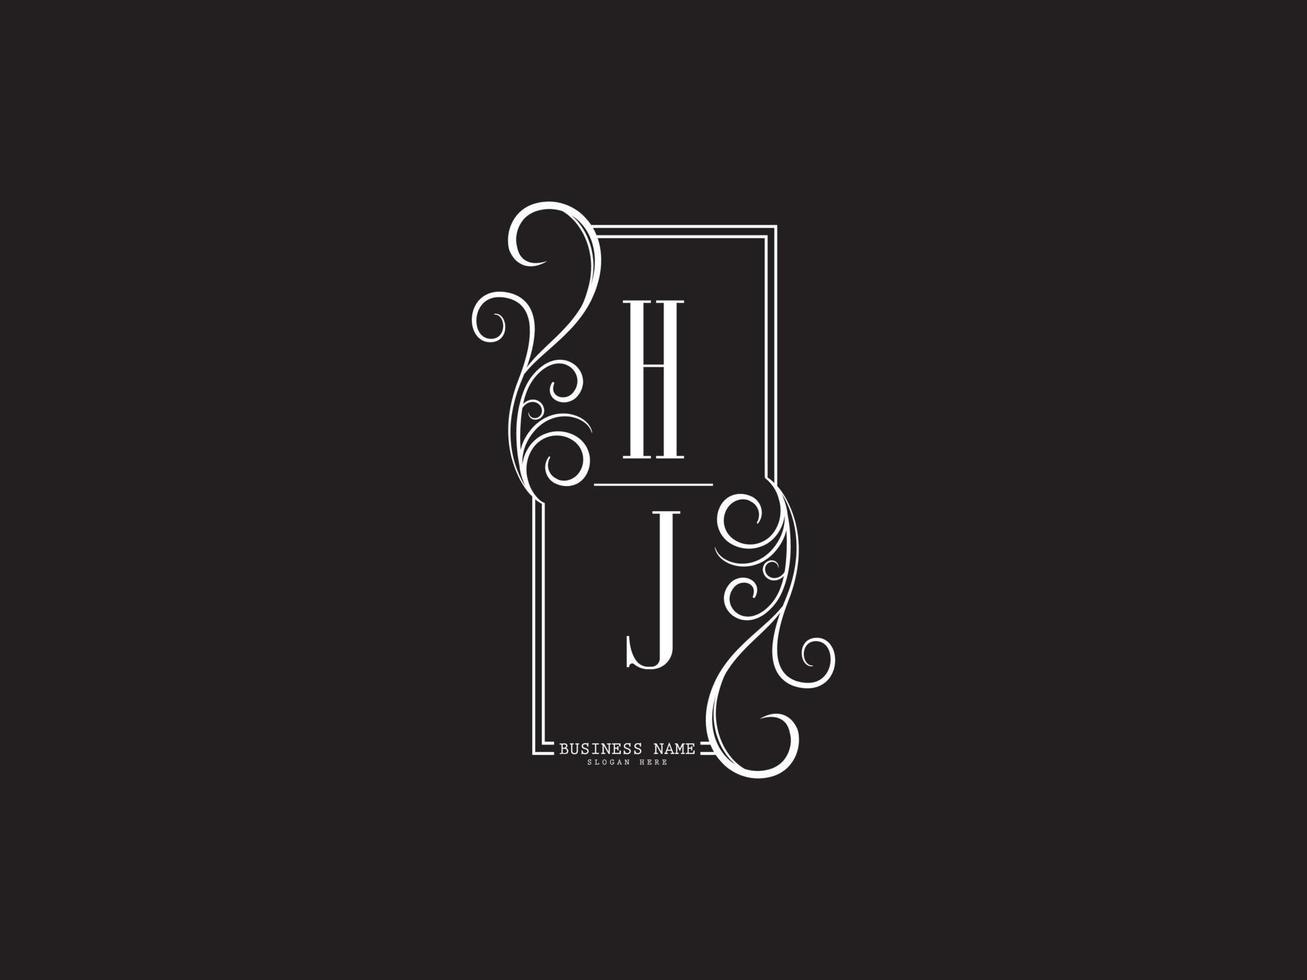 design minimalista de imagem vetorial de letra de logotipo de luxo hj jh vetor